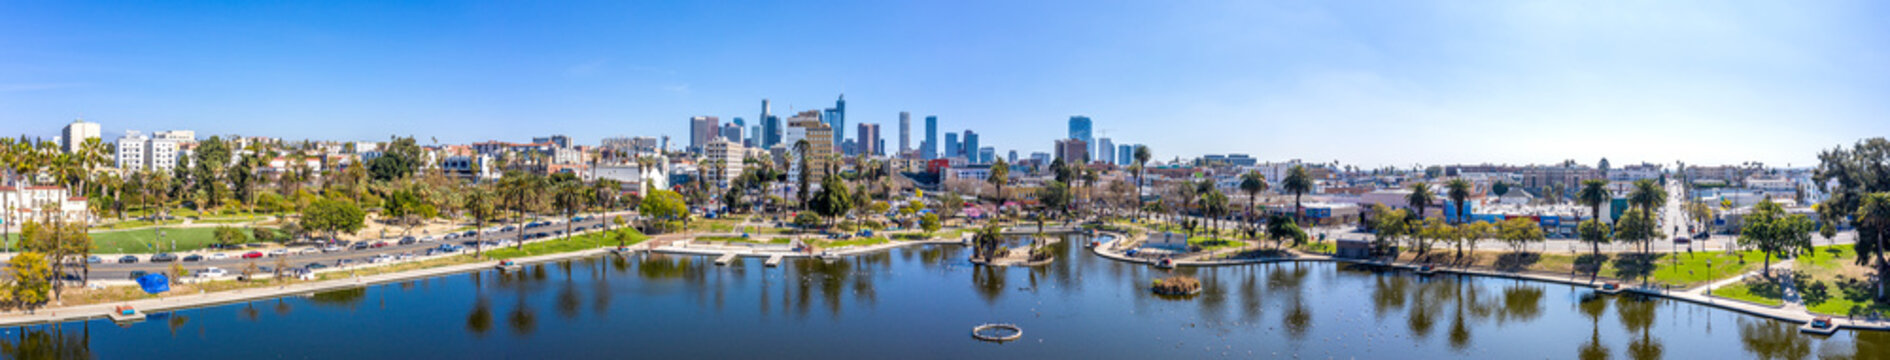 Panorama of MacArthur Park Los Angeles